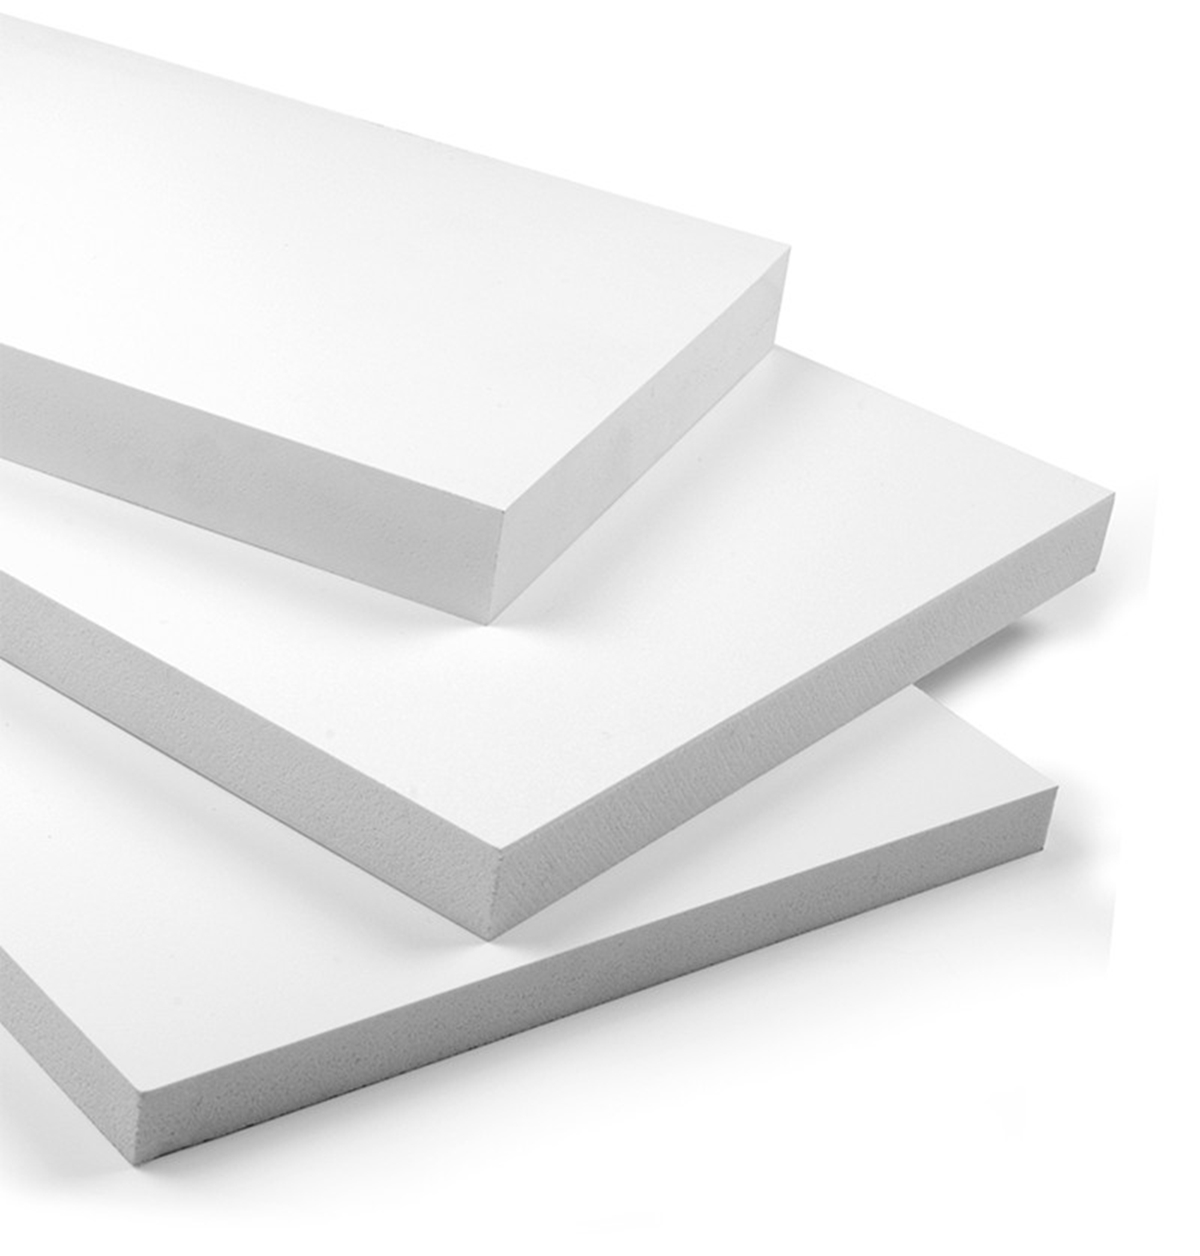 Waterproof WPC Celuka Plate / Popular Foam Board/ PVC Sheet for Construction Interior Decoration